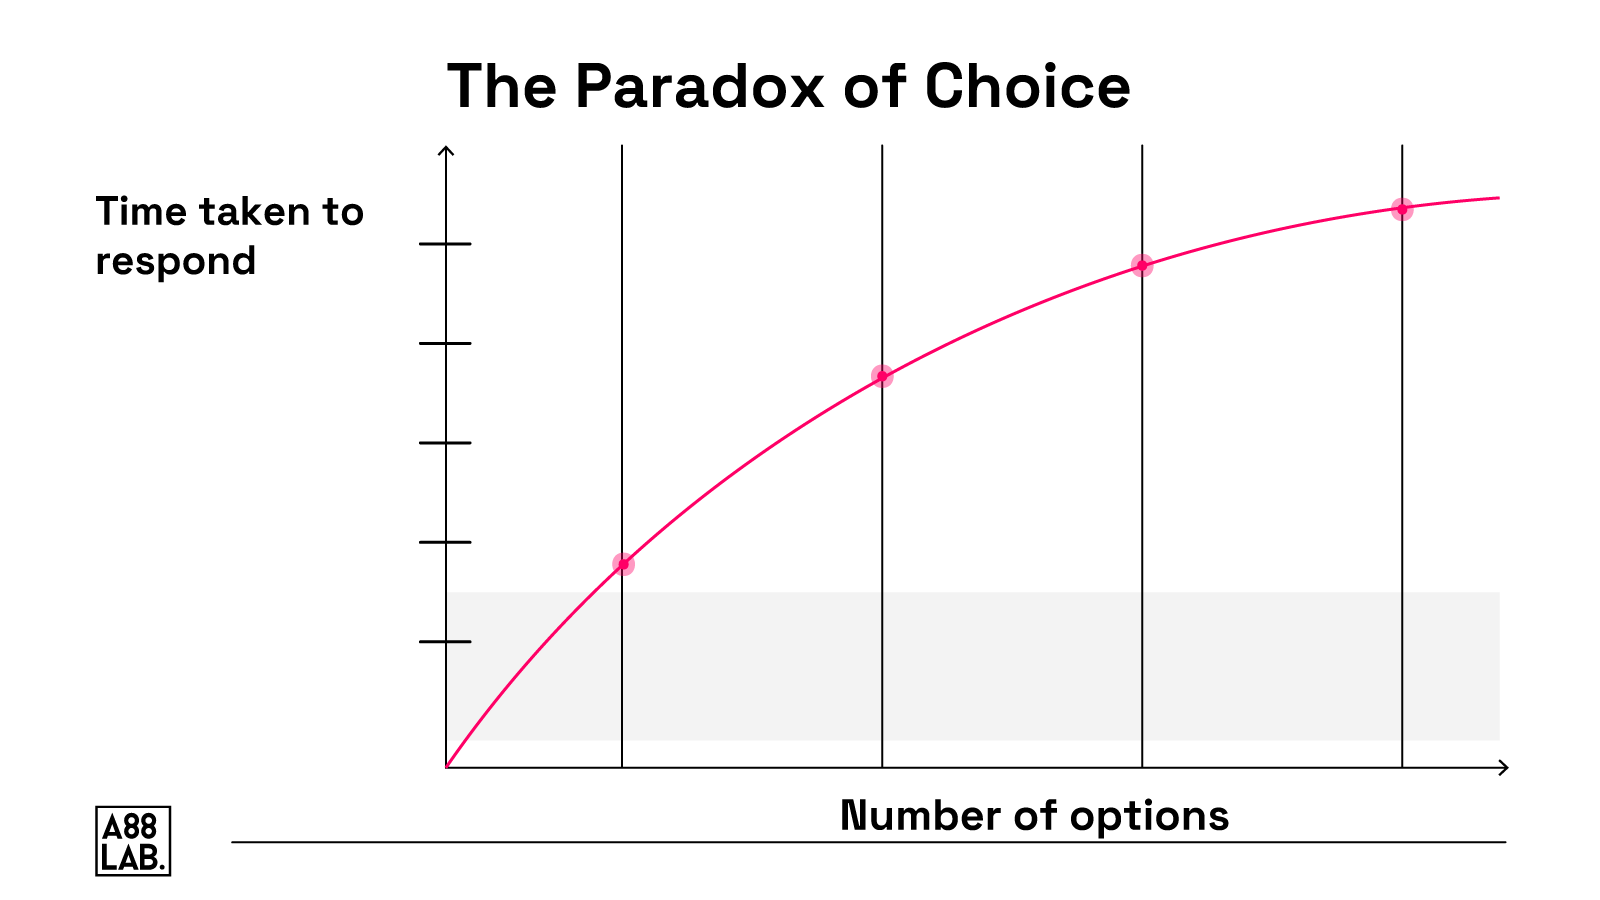 The paradox of choice